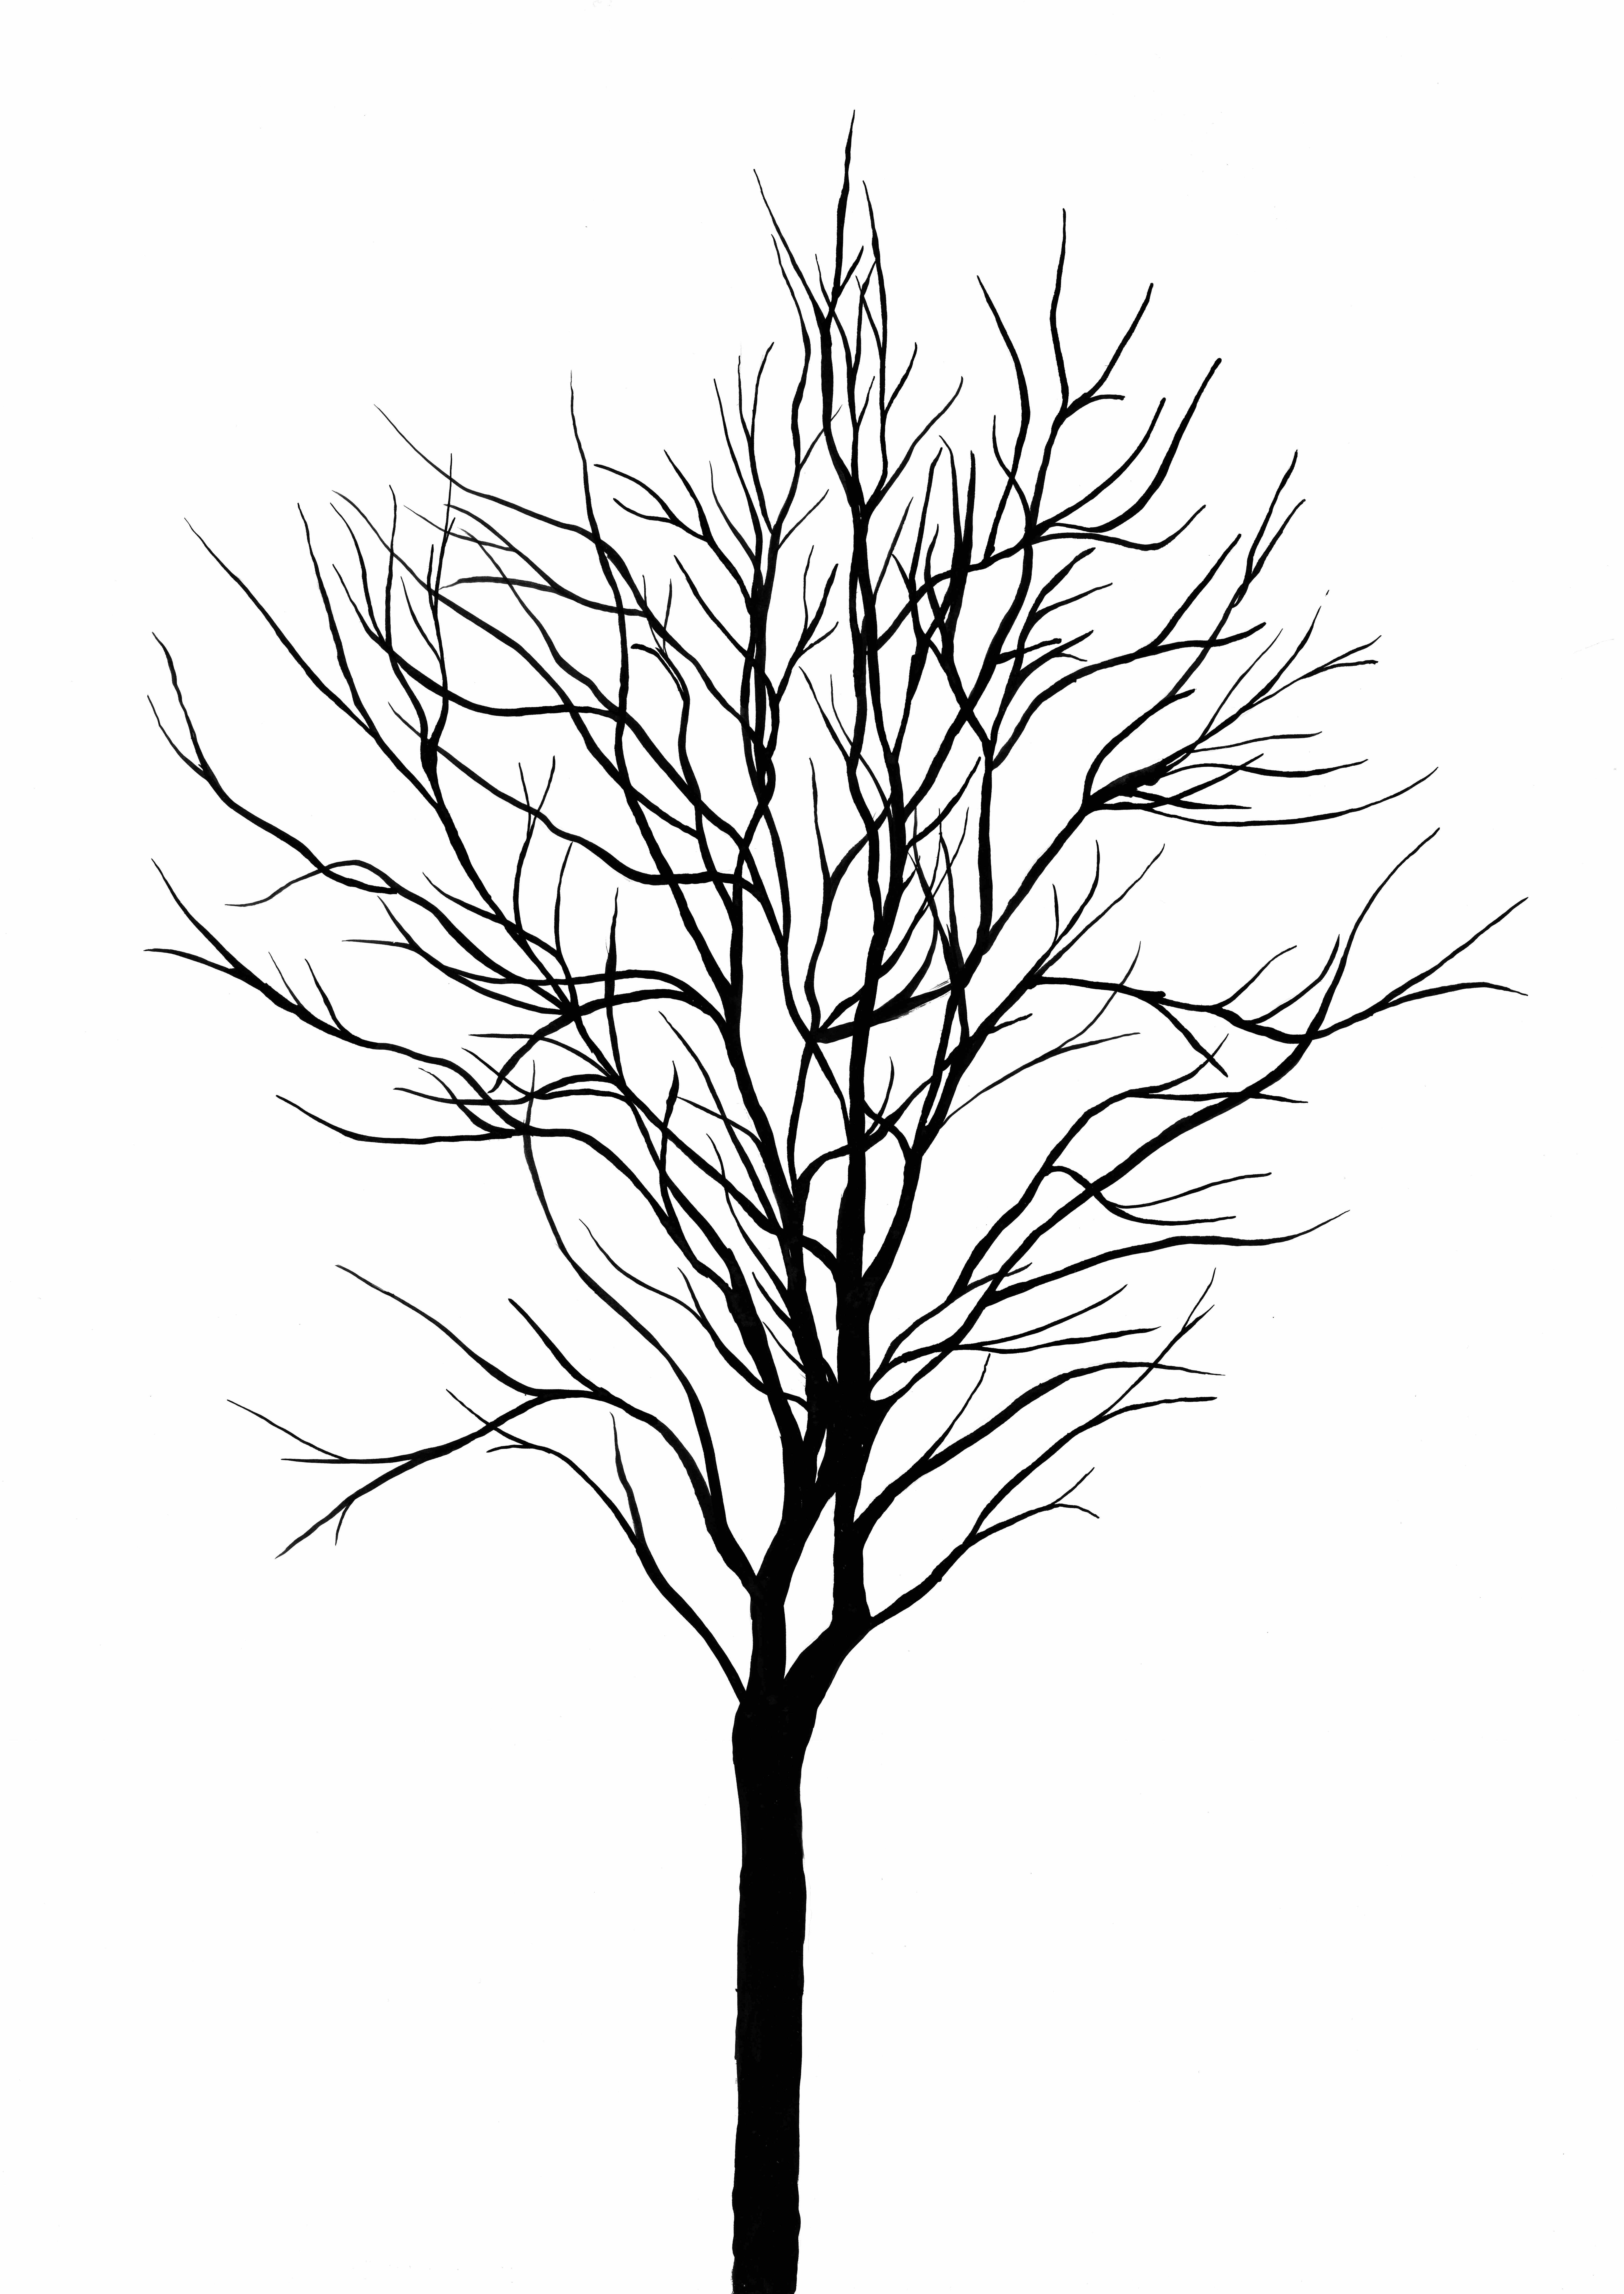 Birch Tree 1 | Ink Drawing by Debbie New